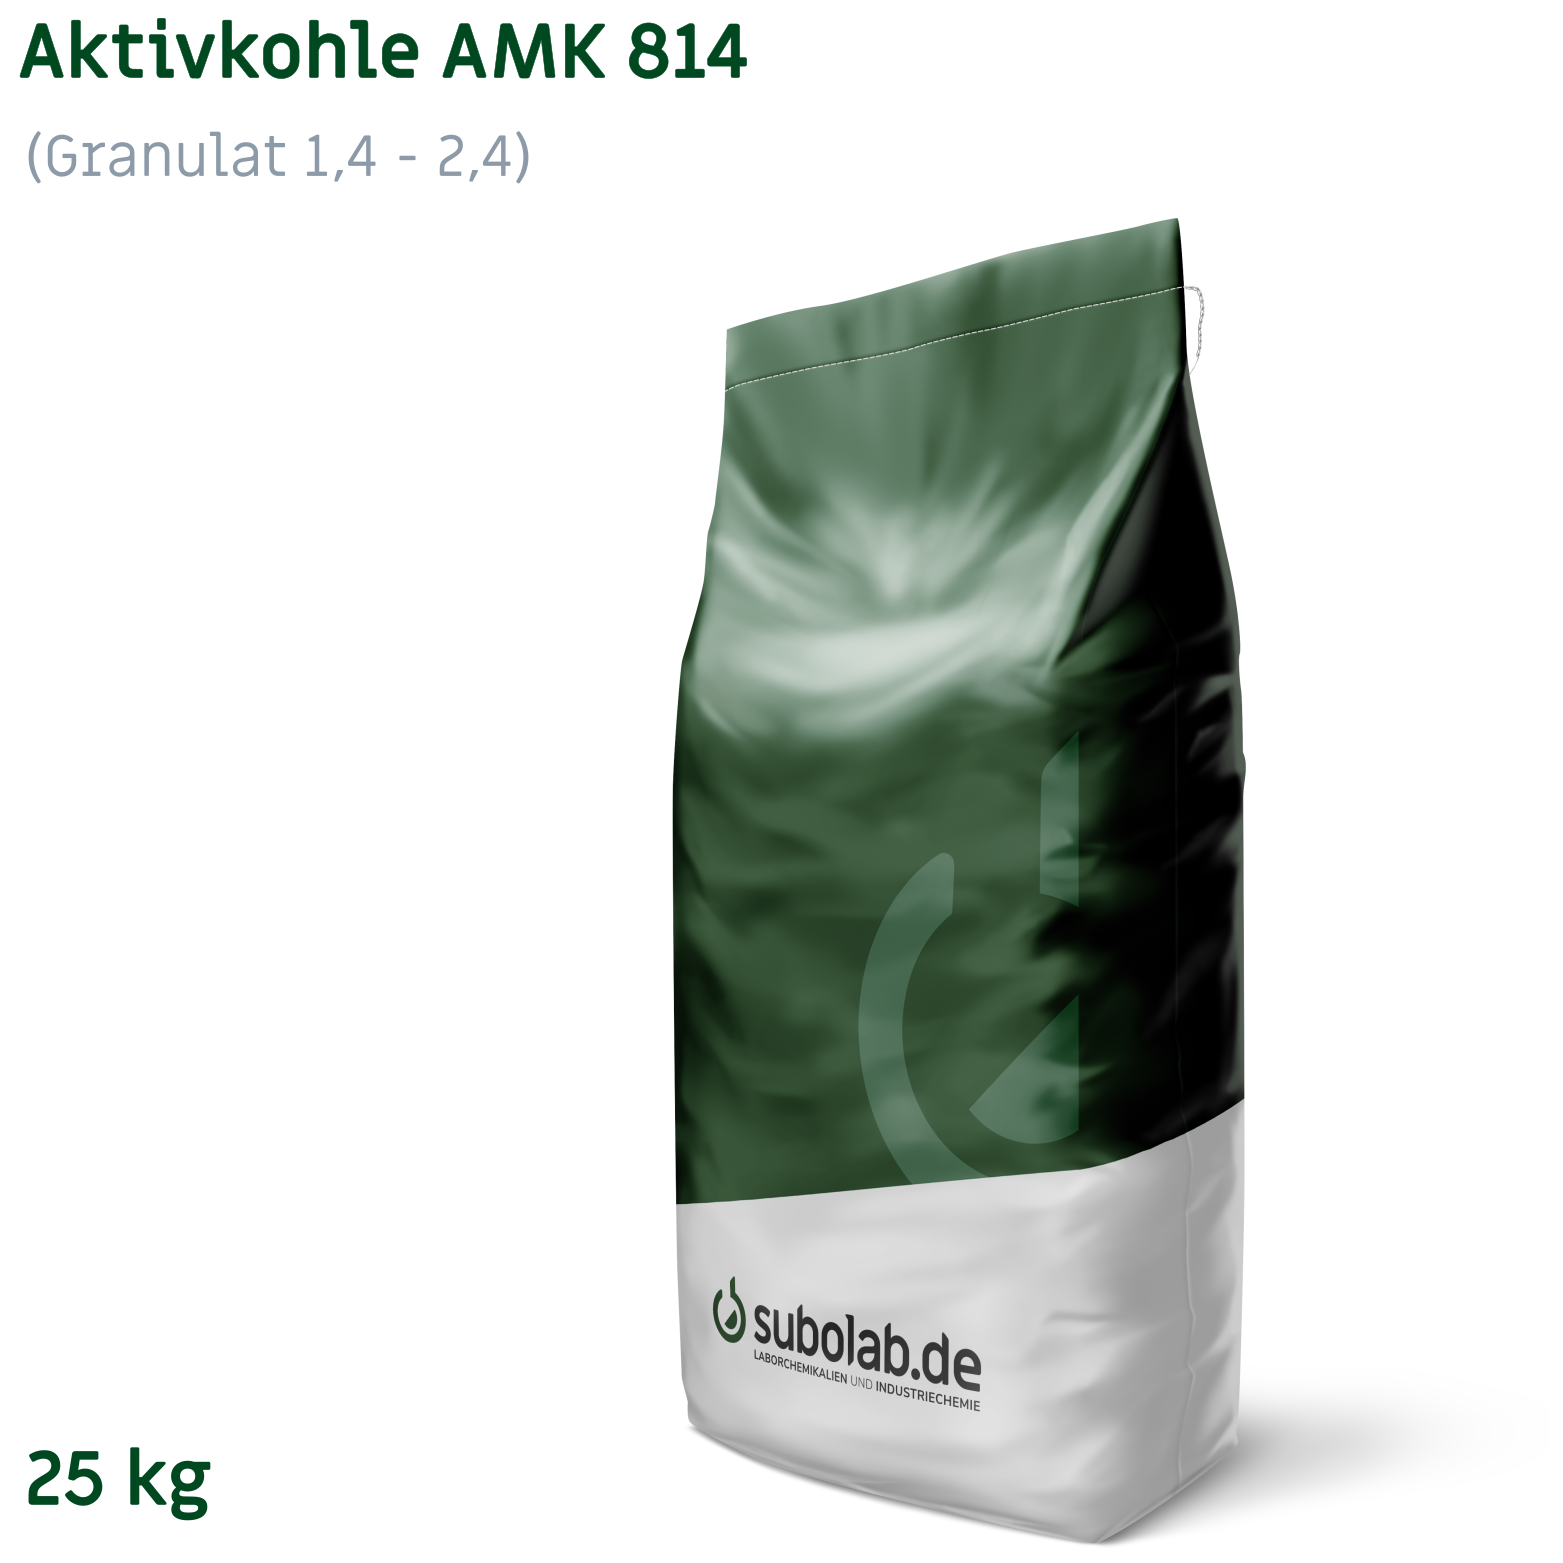 Bild von Aktivkohle AMK 814 (Granulat 1,4 - 2,4) (25 kg)